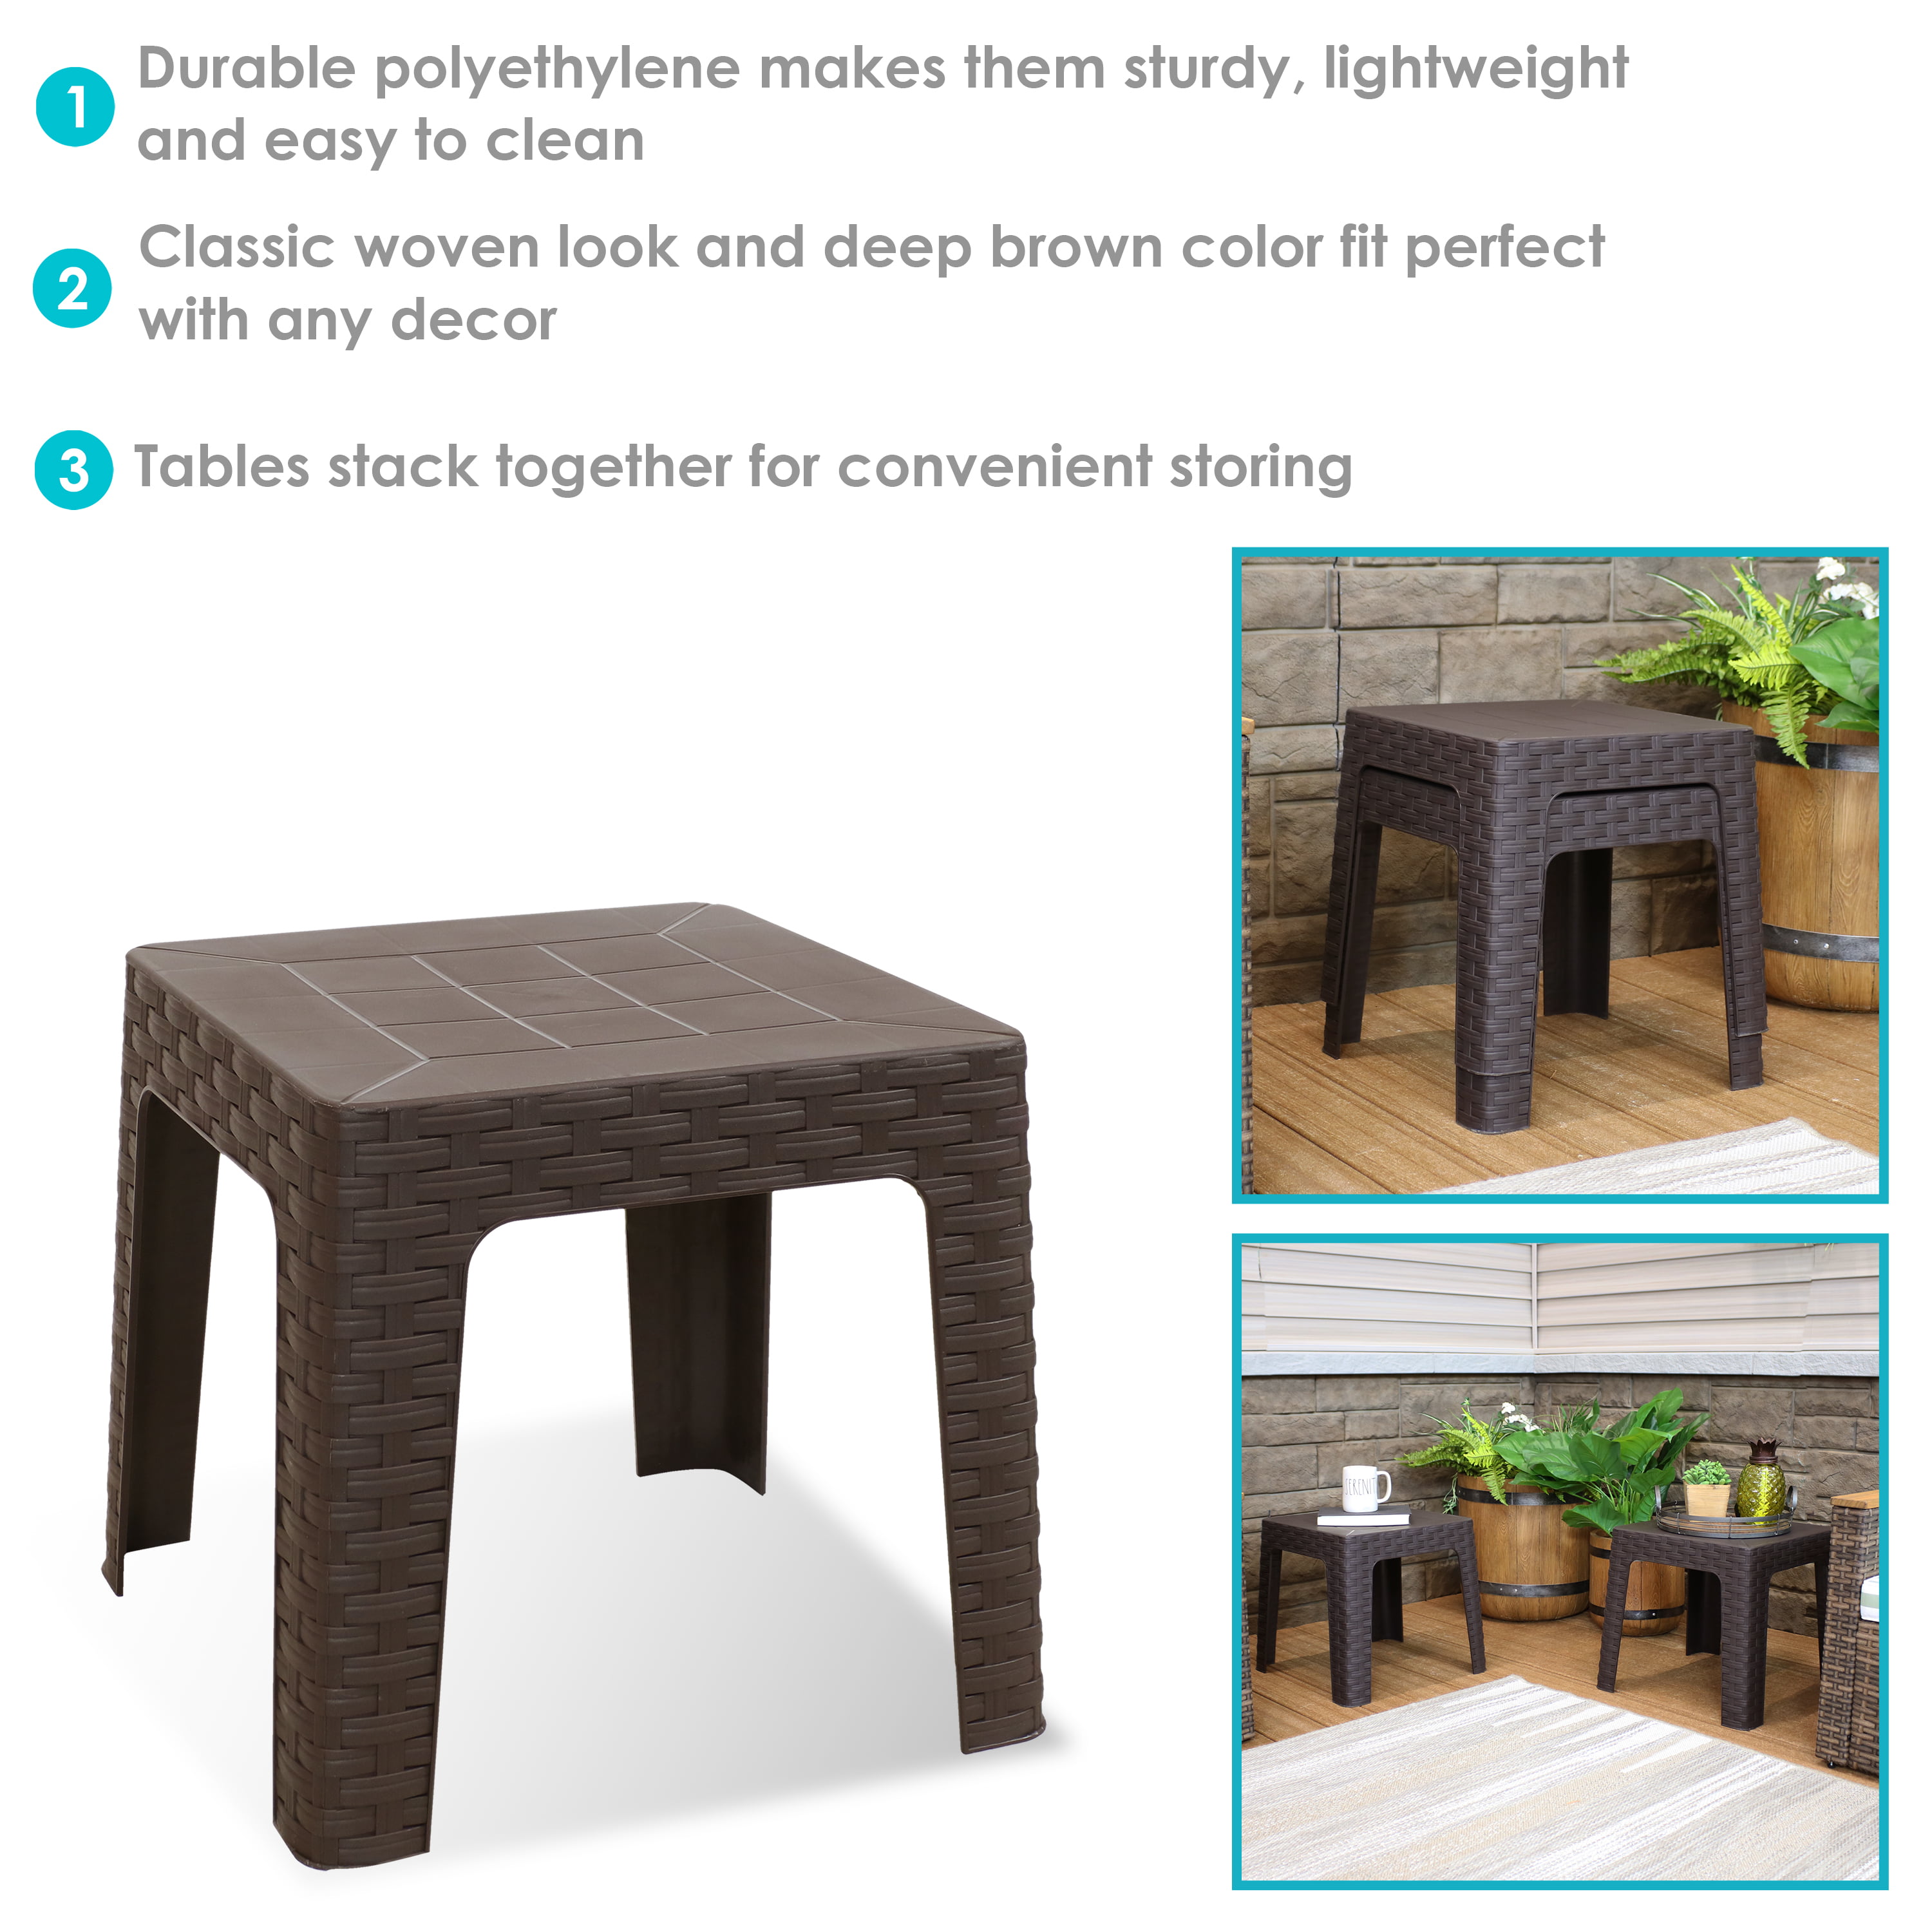 Sunnydaze Polypropylene Indoor/Outdoor Square Patio Side Table, Brown, 2pk